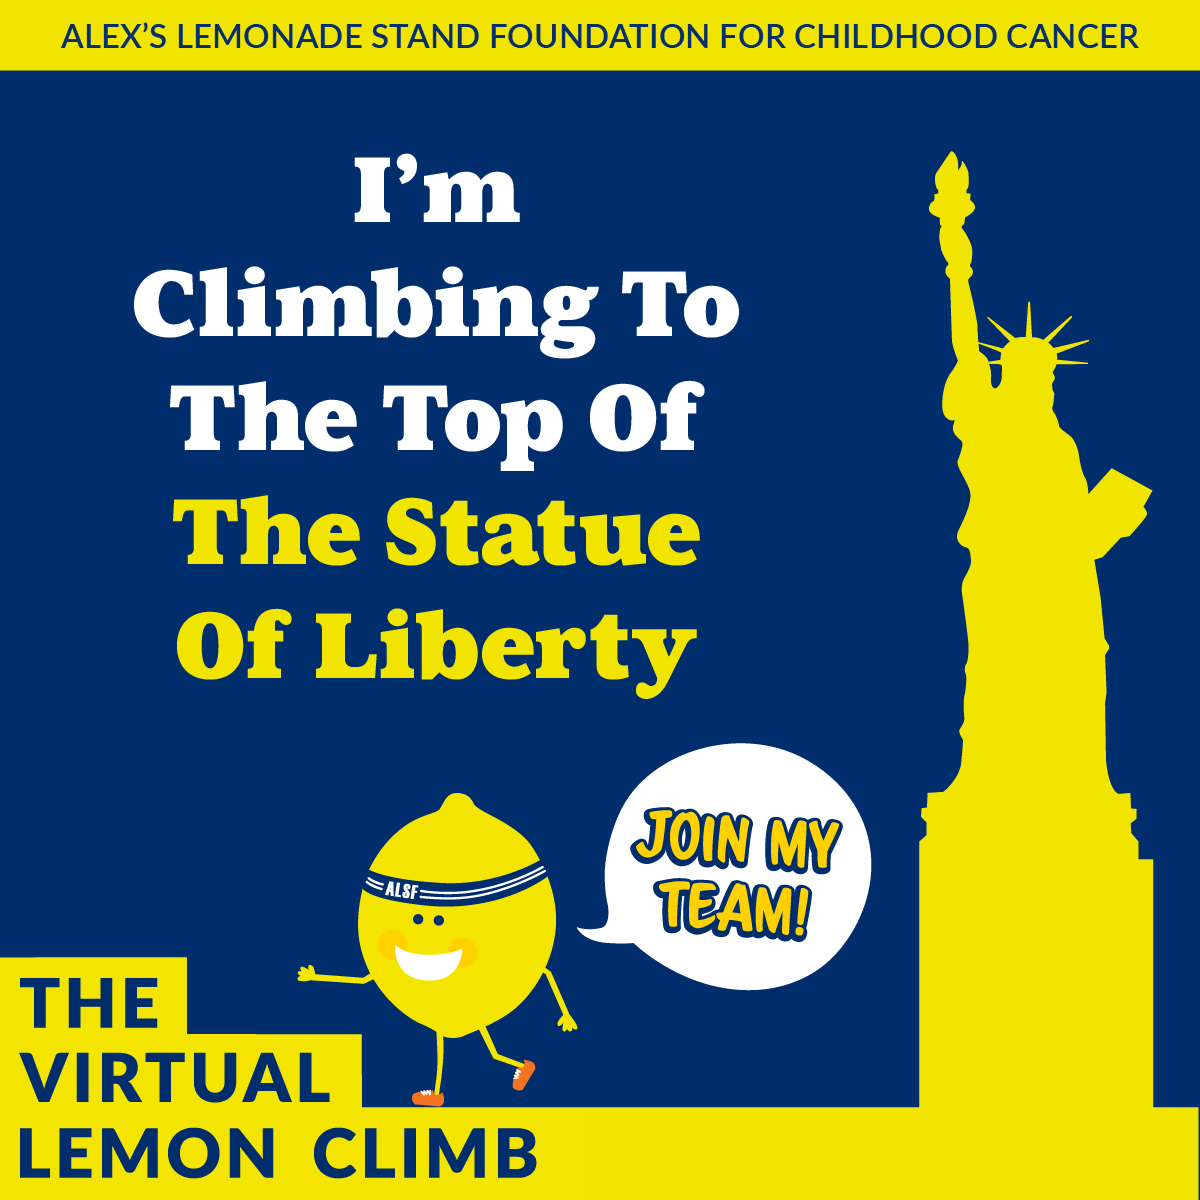 Alex's Lemonade Stand Foundation for Childhood Cancer